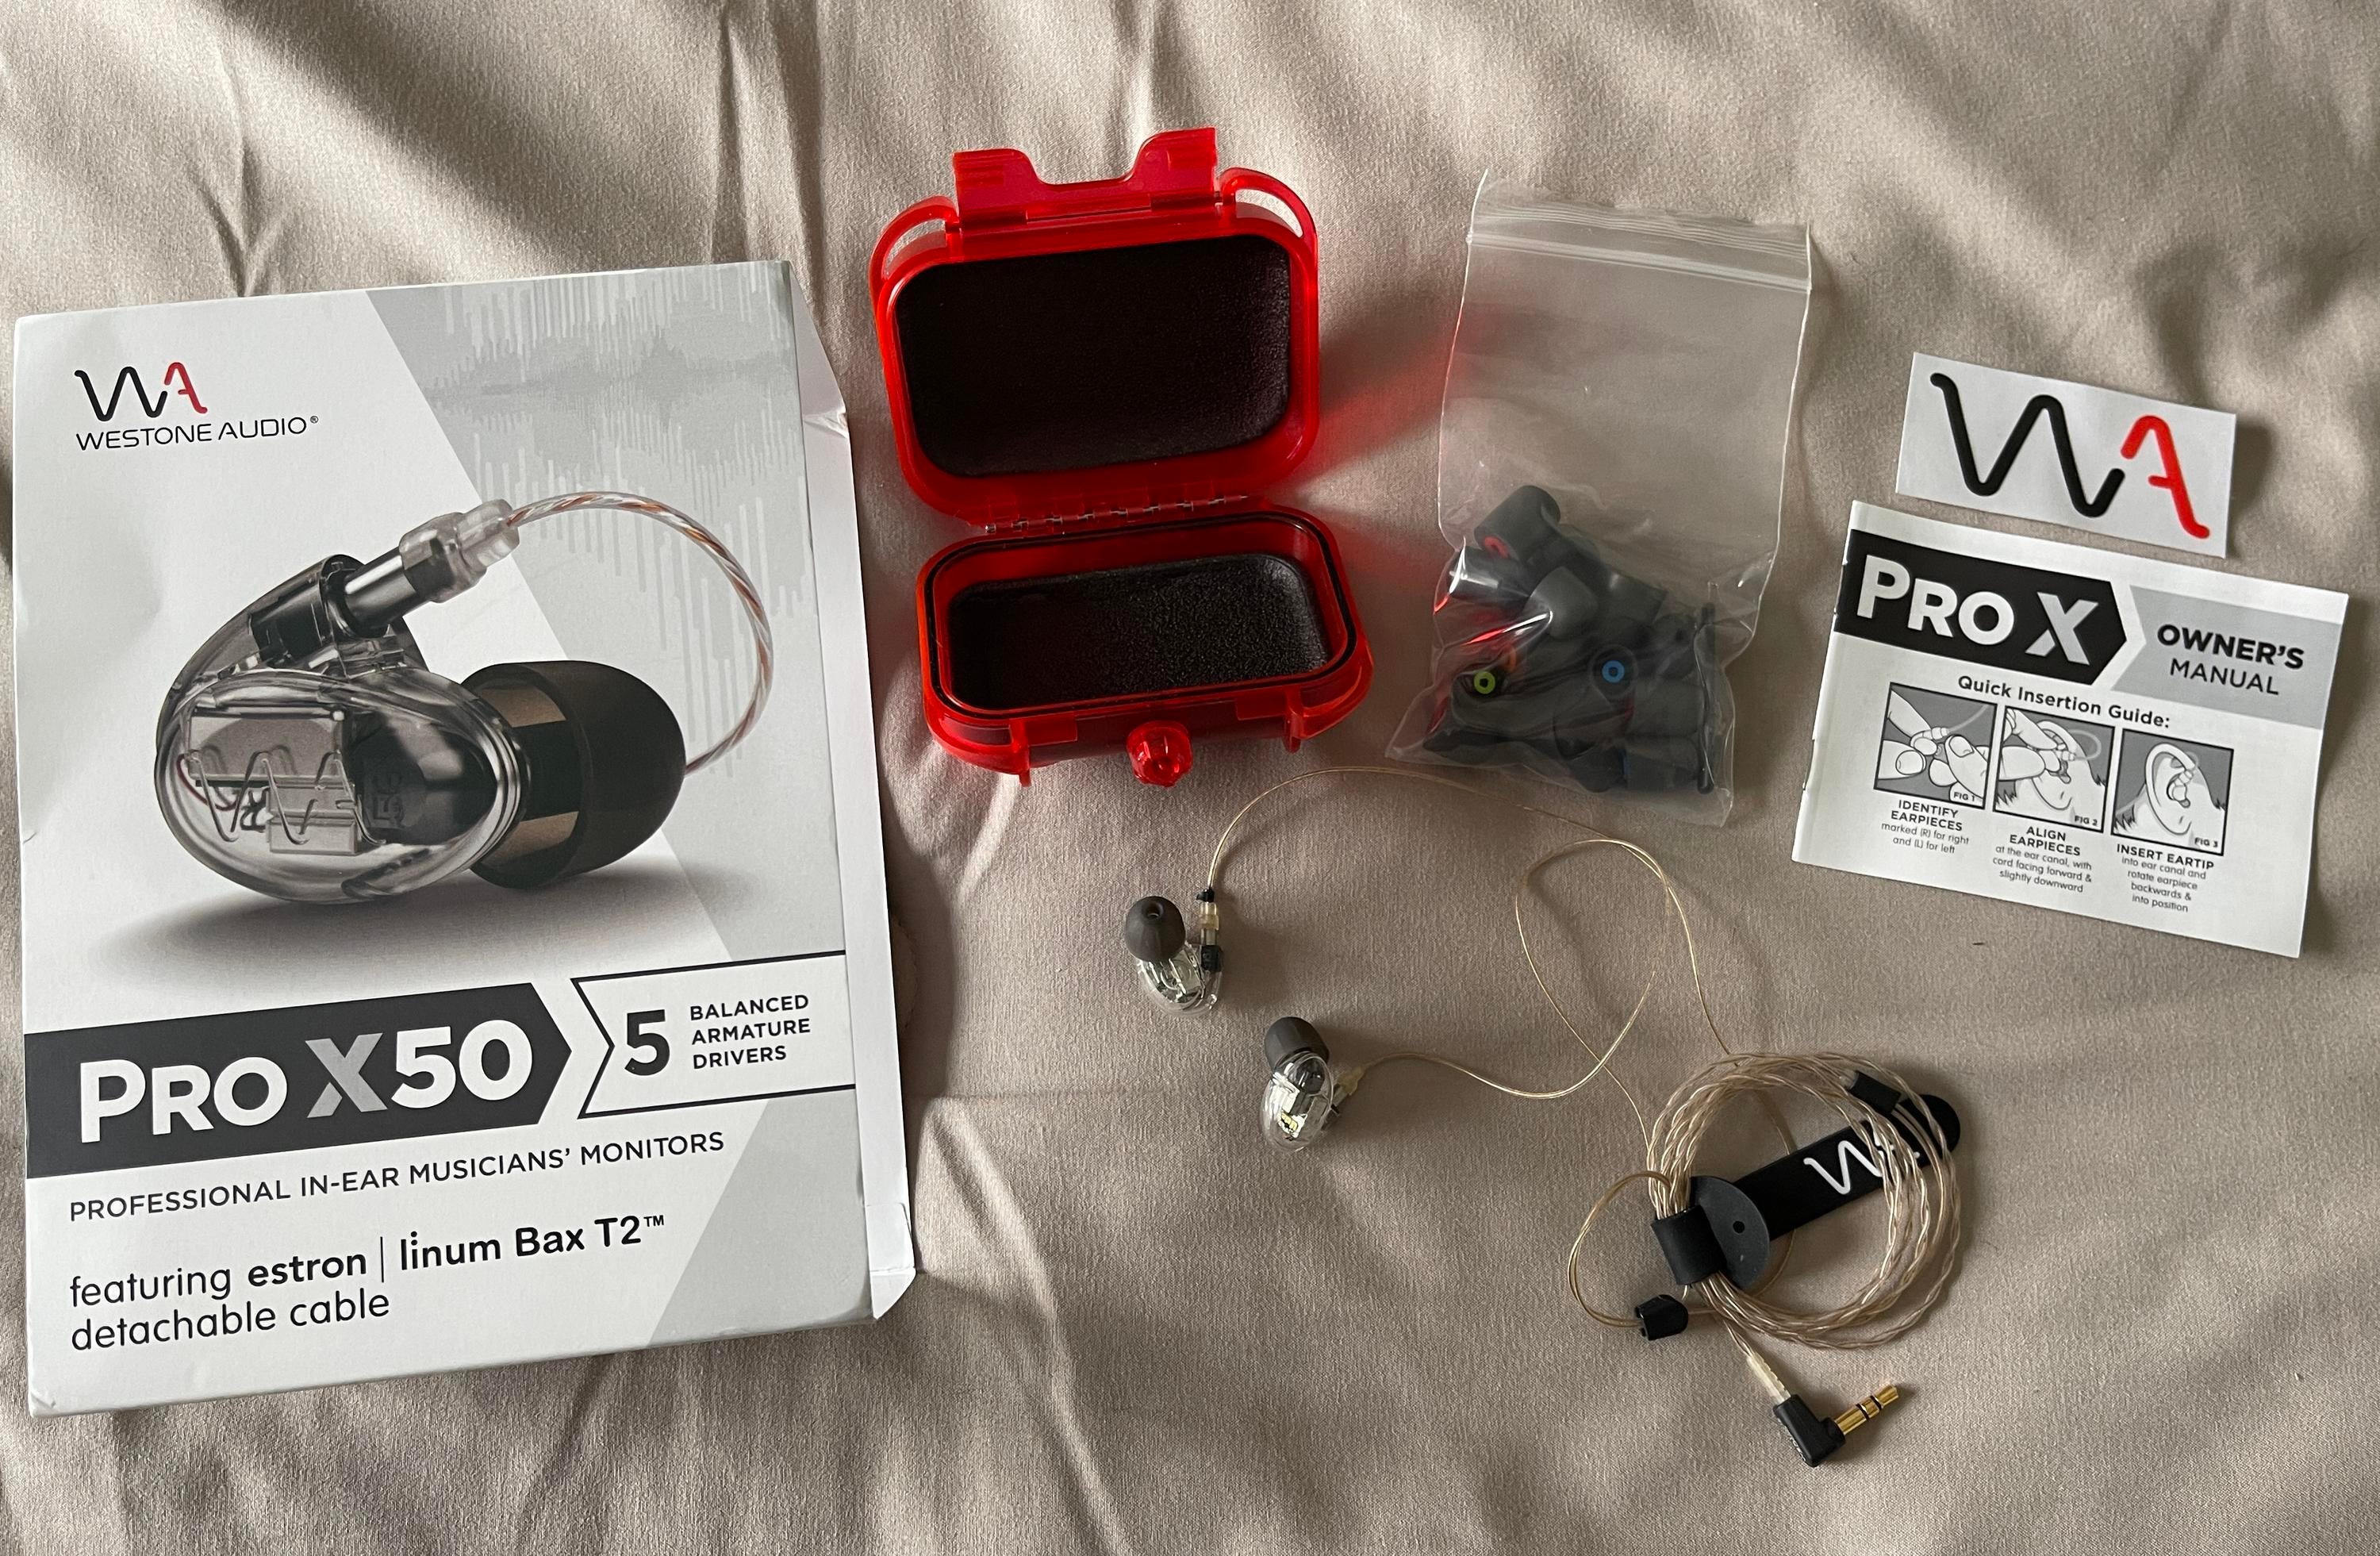 Used Westone Audio Pro X50 • NEVER USED | Gear Exchange